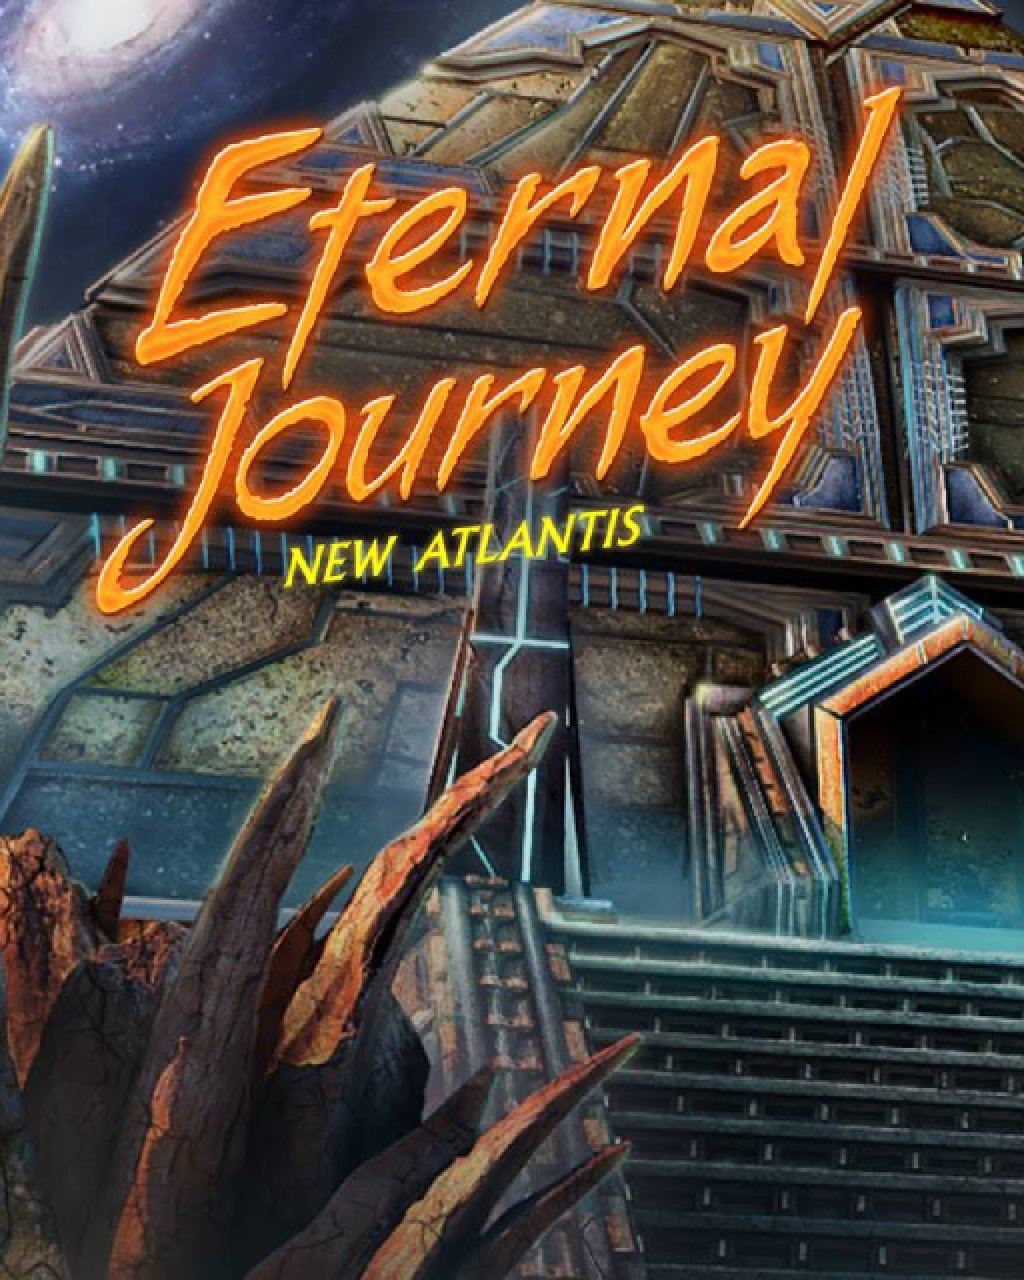 ESD Eternal Journey New Atlantis